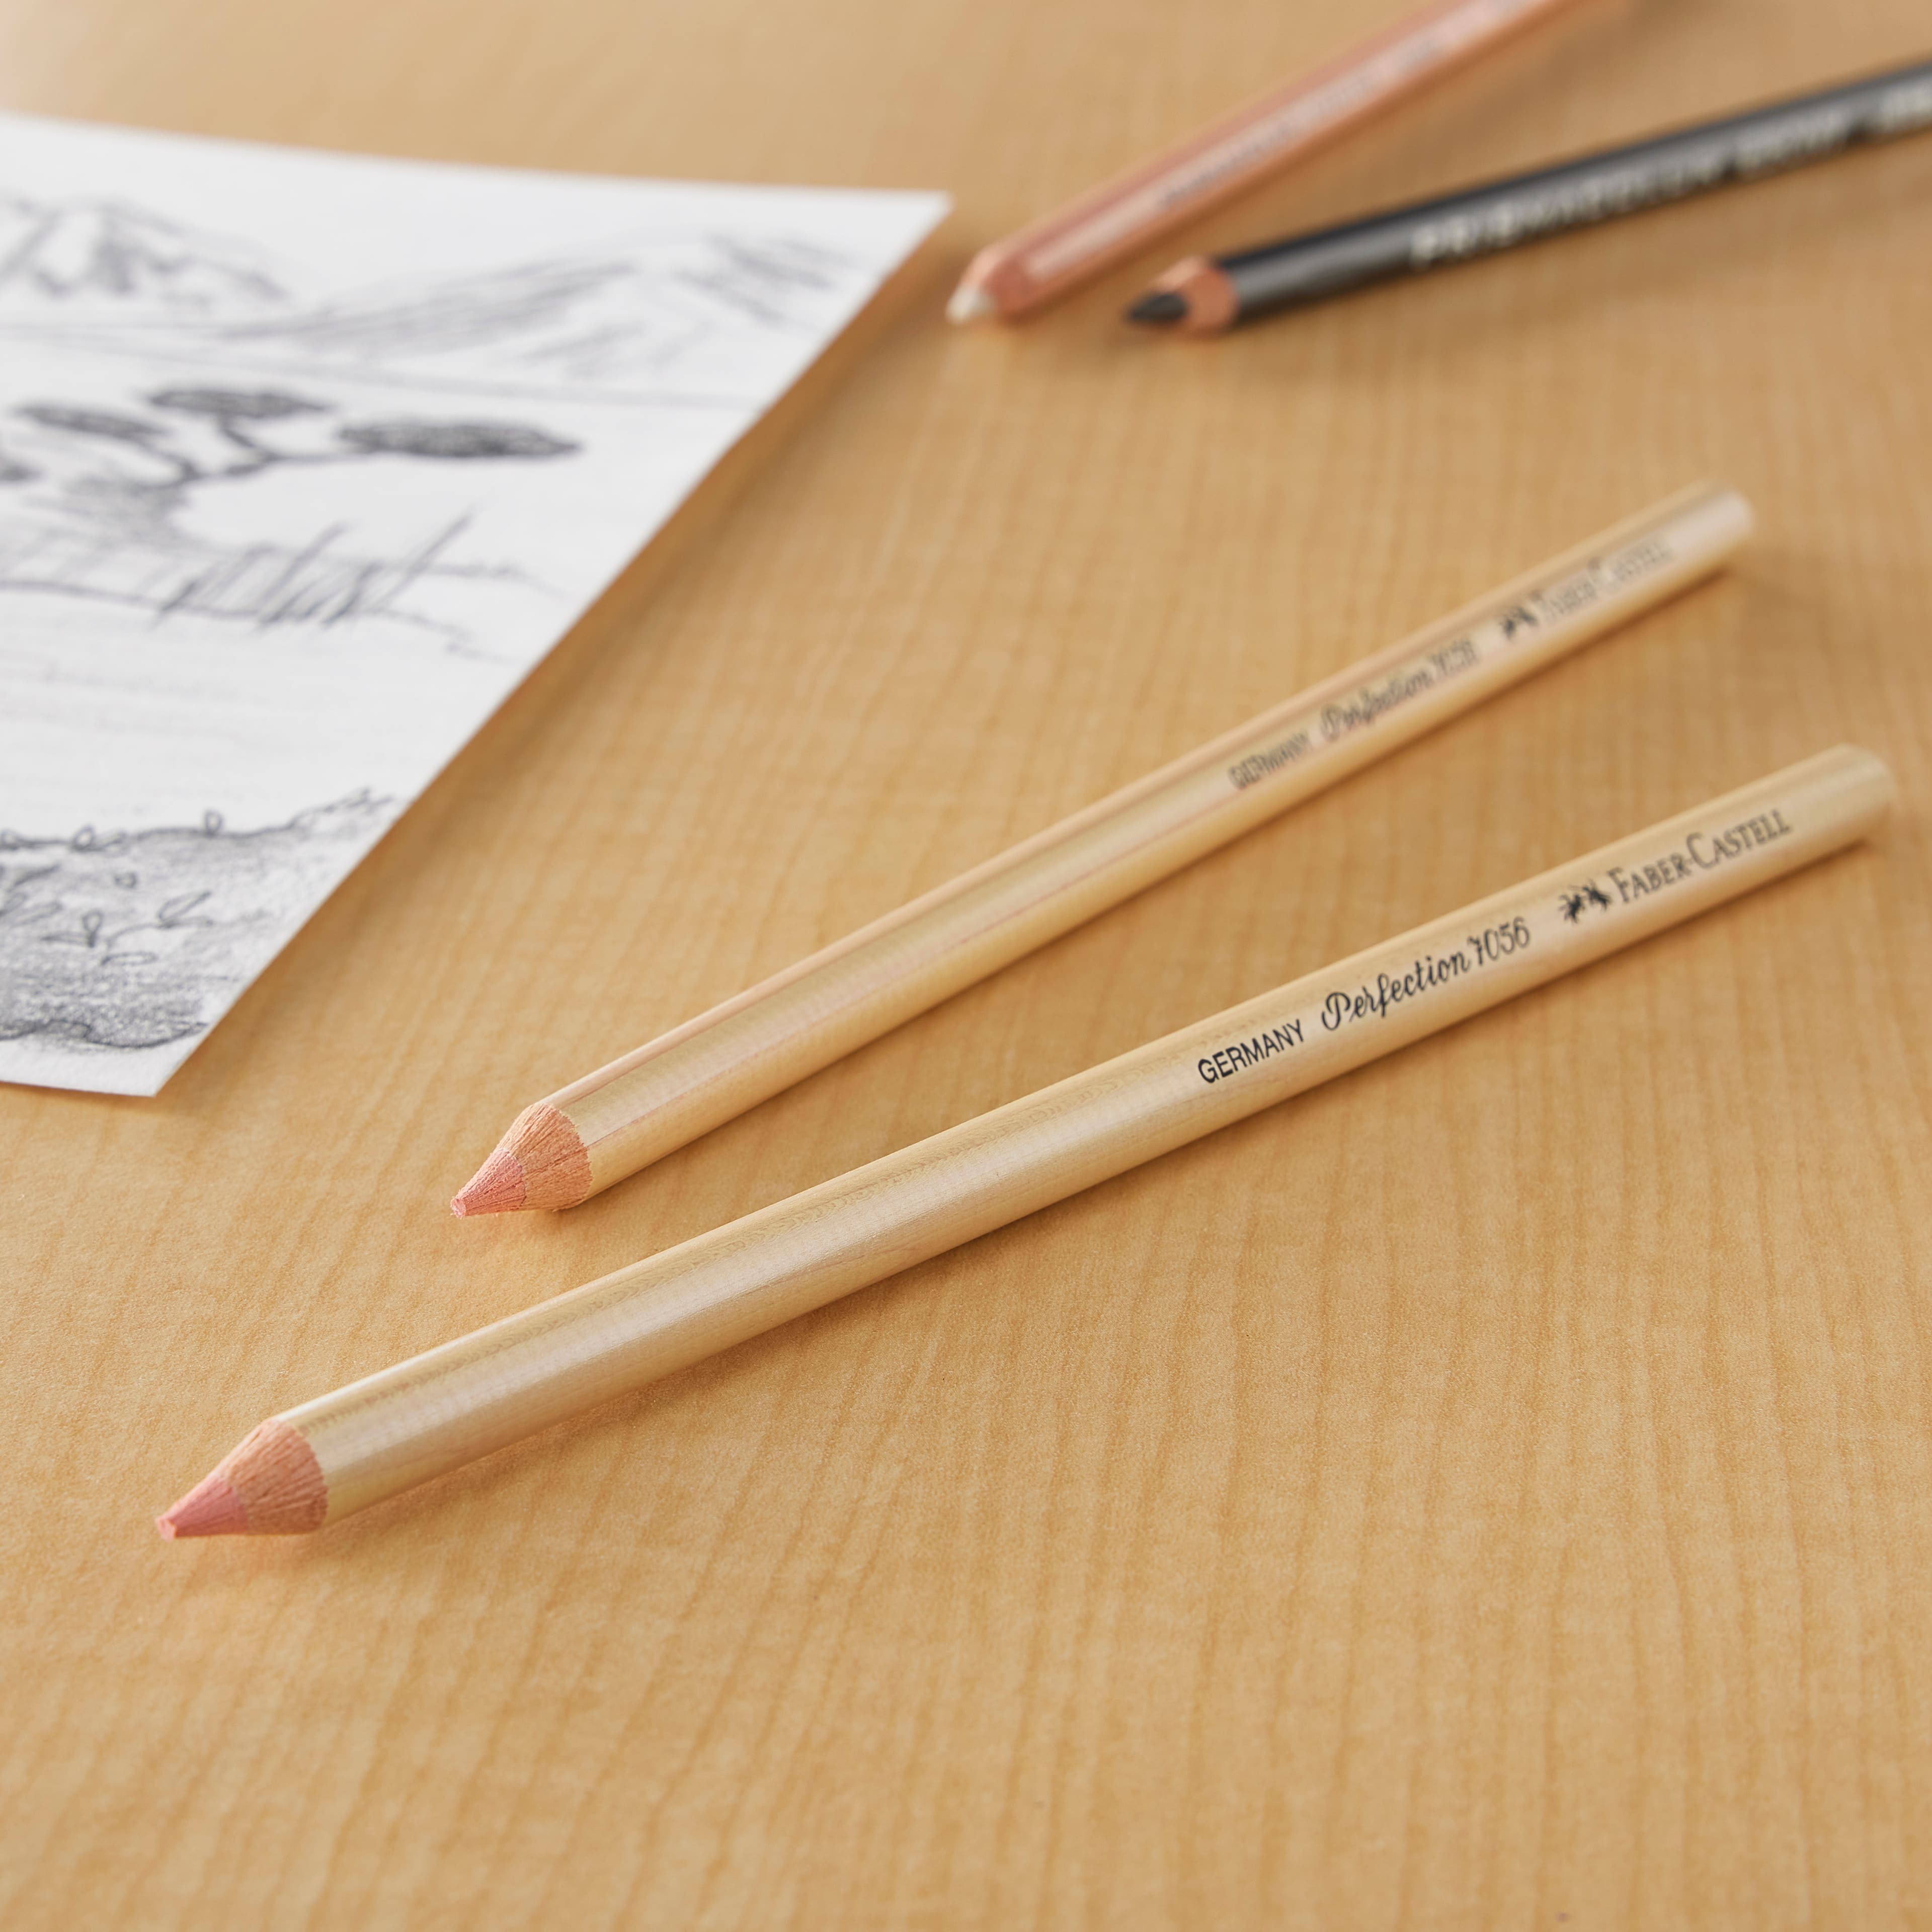 Faber-Castell Eraser Pencils NOS